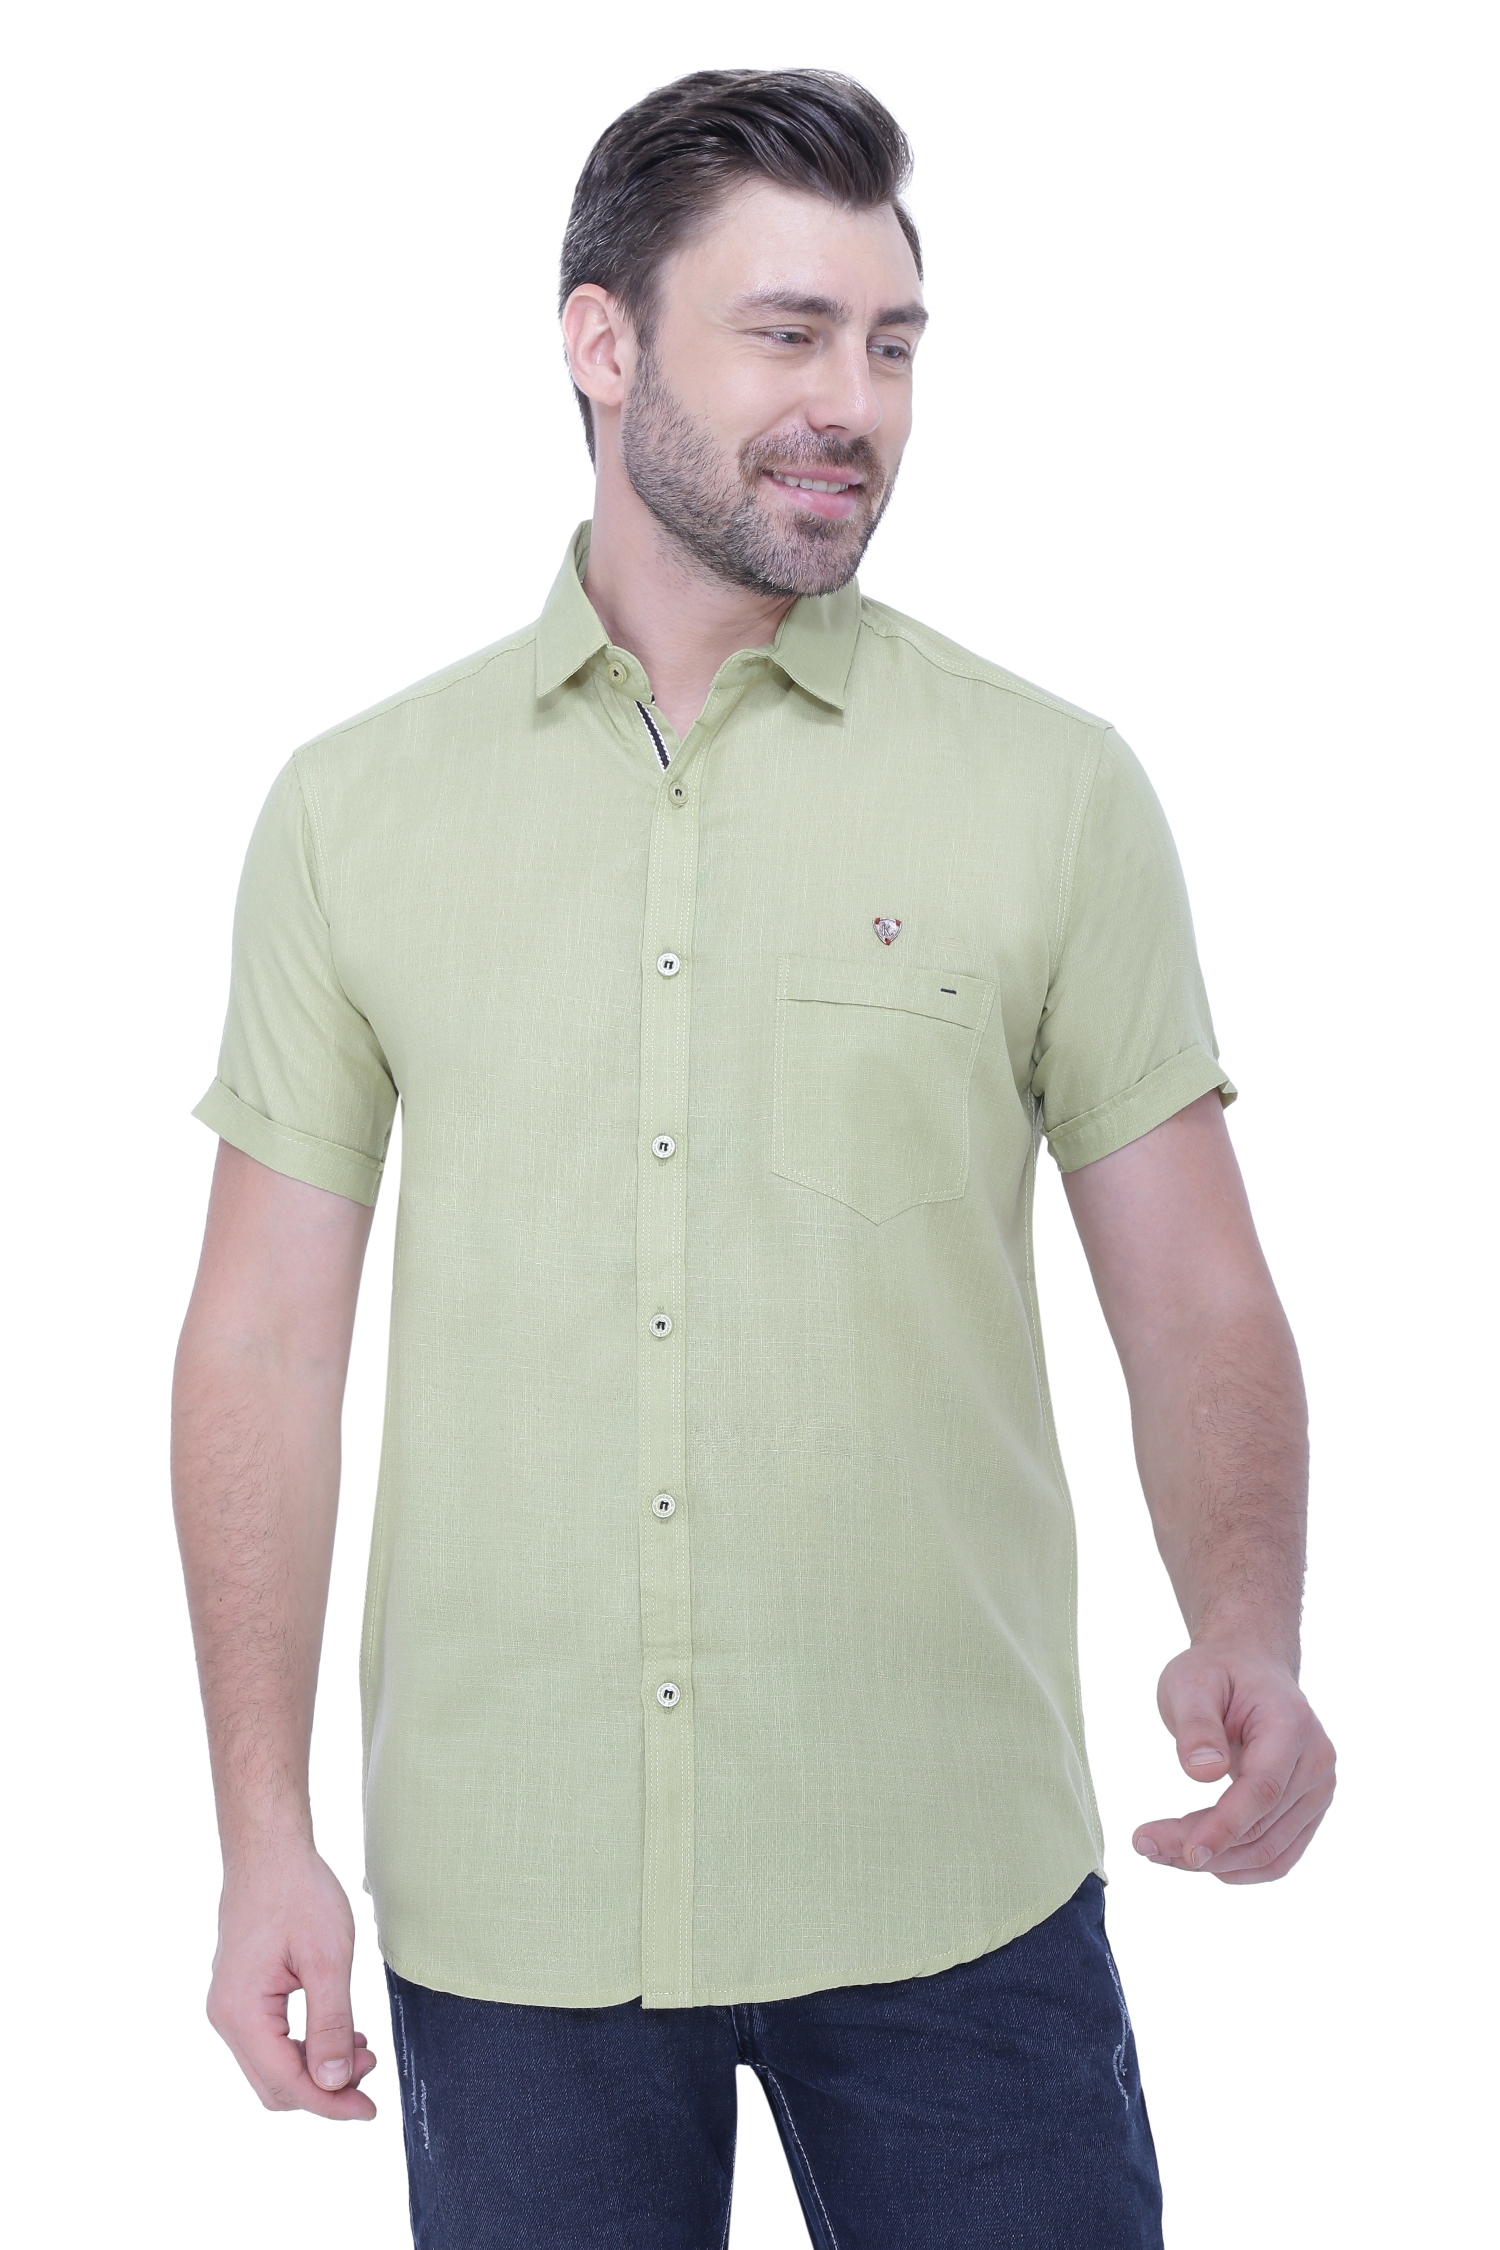 Kuons Avenue | Kuons Avenue Men's Linen Blend Half Sleeves Casual Shirt-KACLHS1243